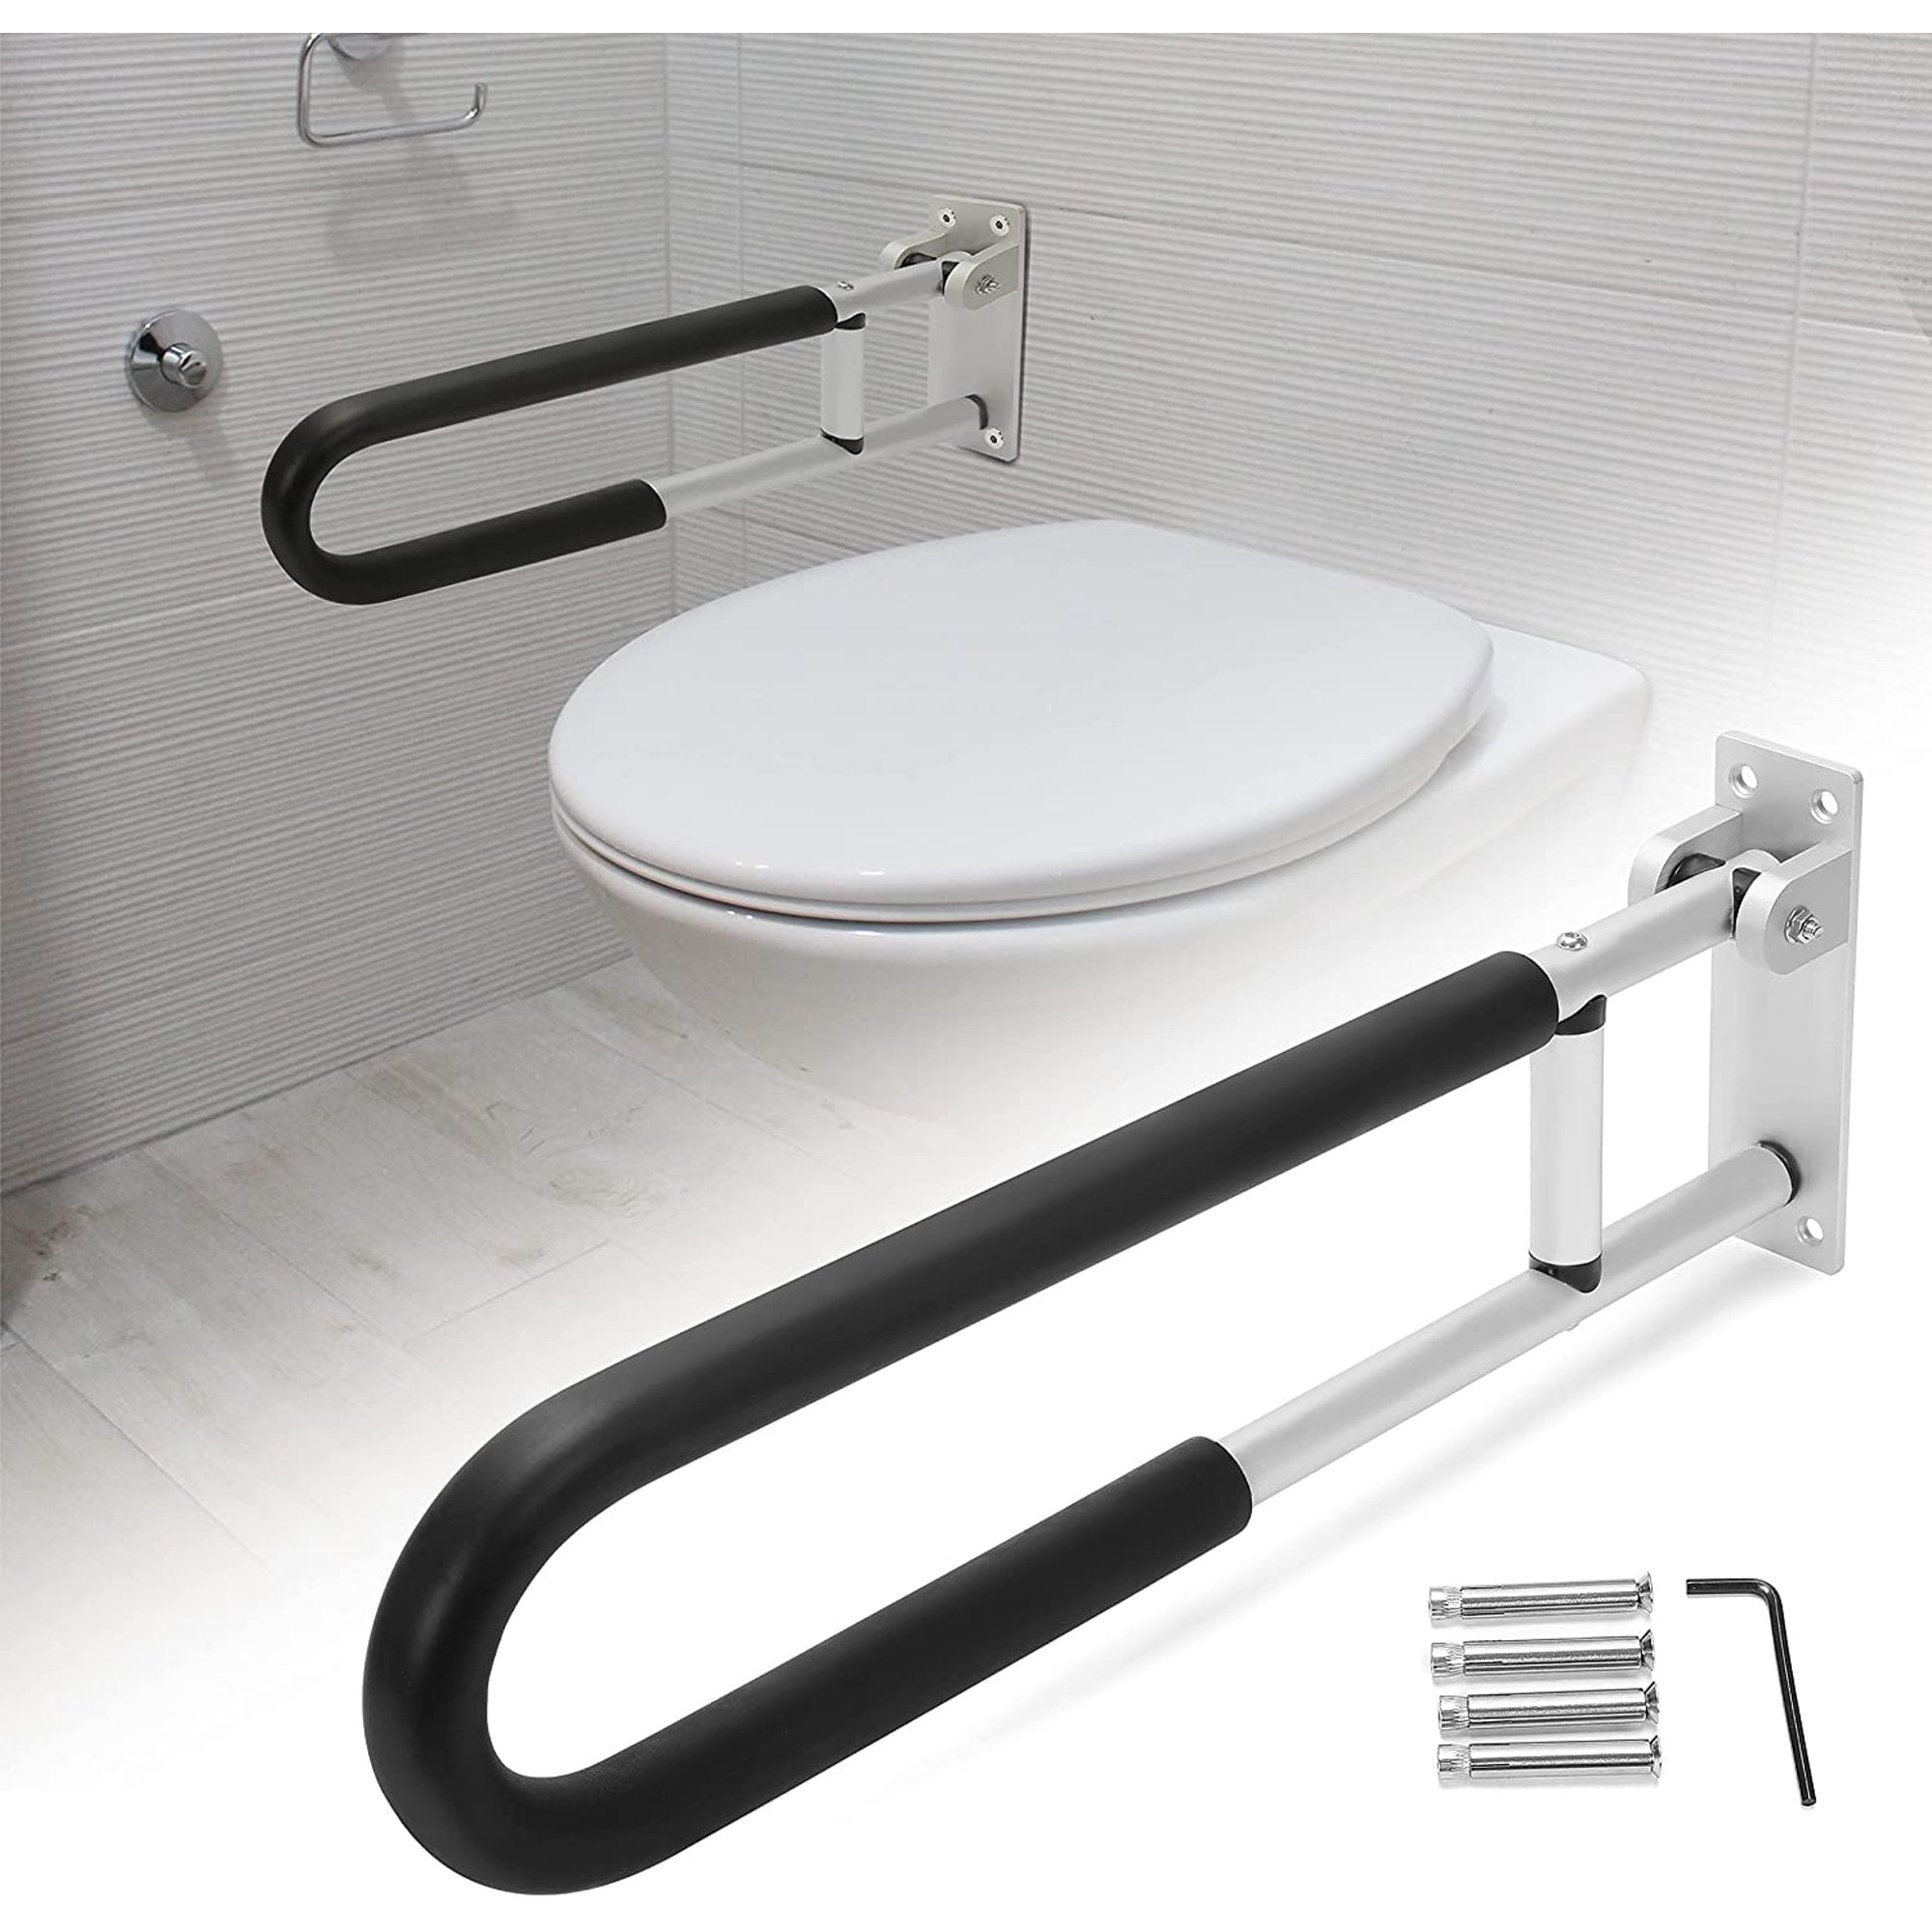 Carex White Bathtub Rail - Grab Bars for Bathroom, Bathtubs & Showers -  Side Hand Grip Railing & Support - Shower Handle & Bath Tub Bar Clamps for  Seniors & Elderly